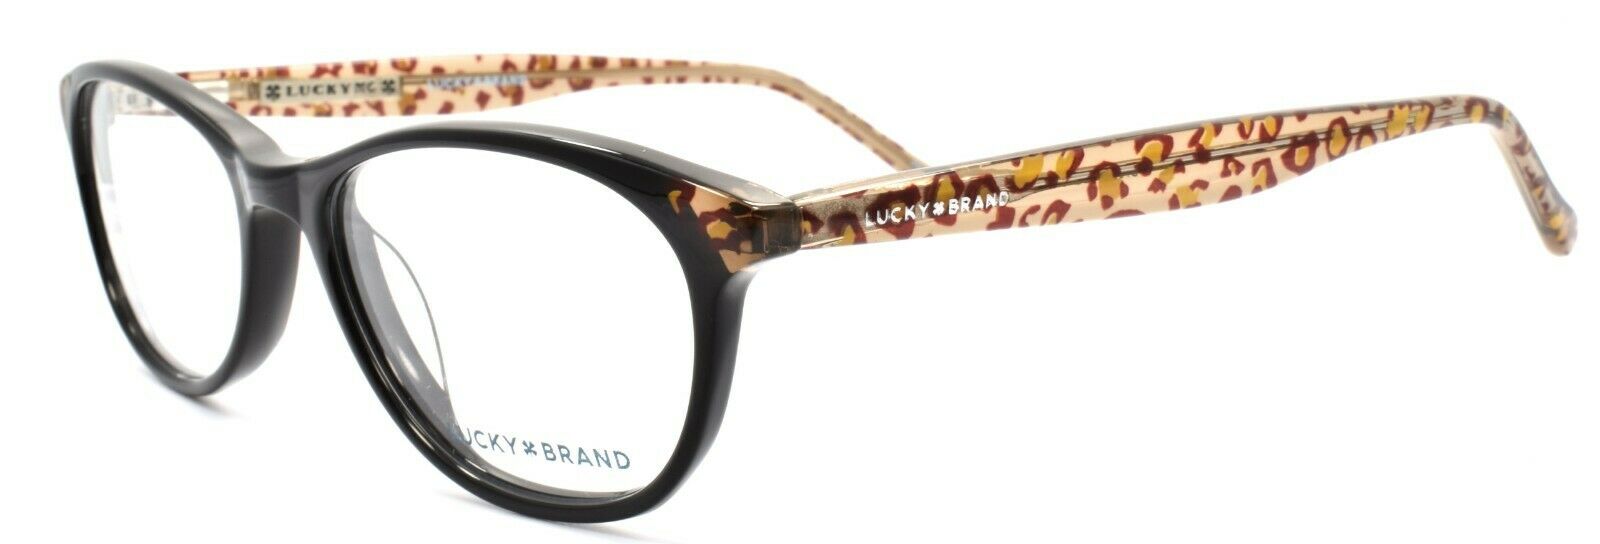 1-LUCKY BRAND D700 Women's Eyeglasses Frames 50-16-135 Black + CASE-751286281941-IKSpecs